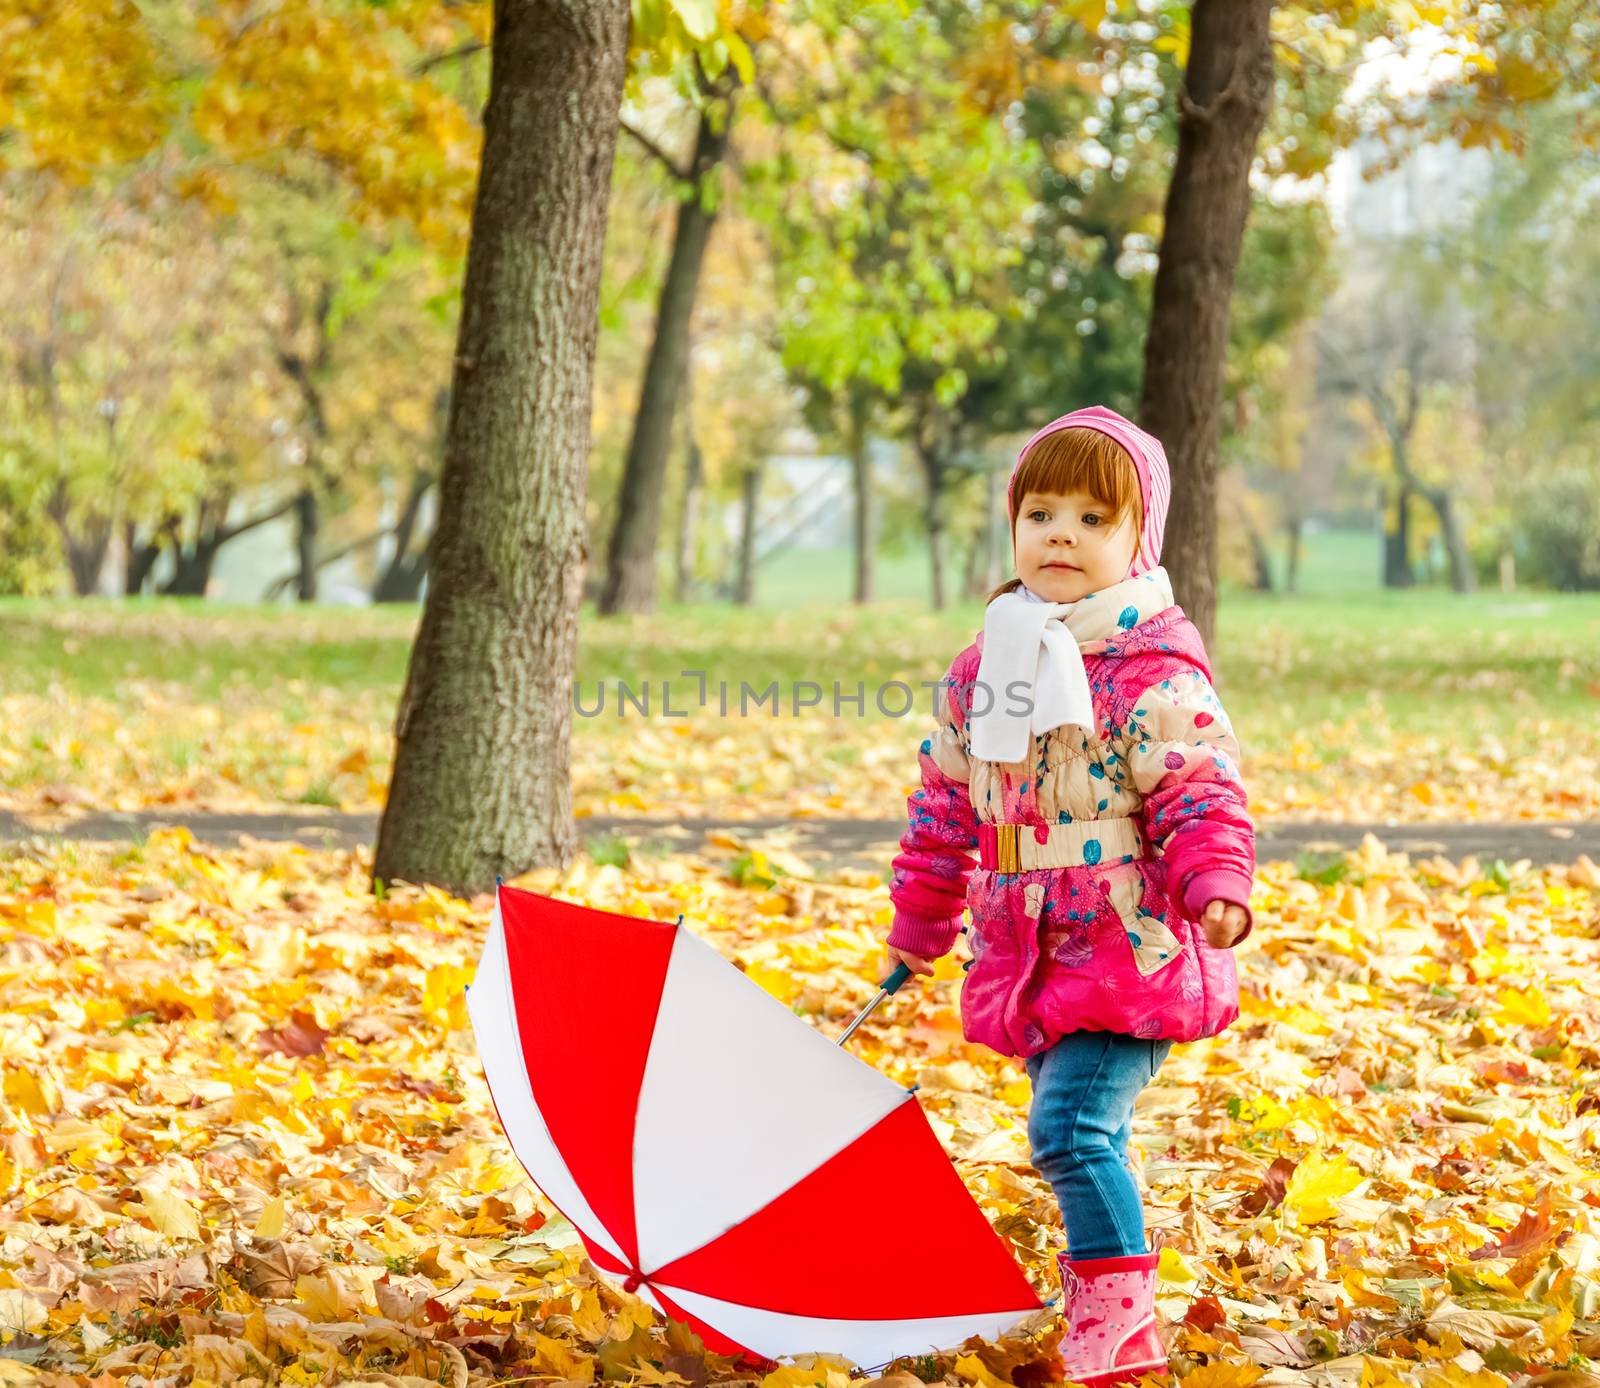 A little girl walking in the park with an umbrella by zeffss